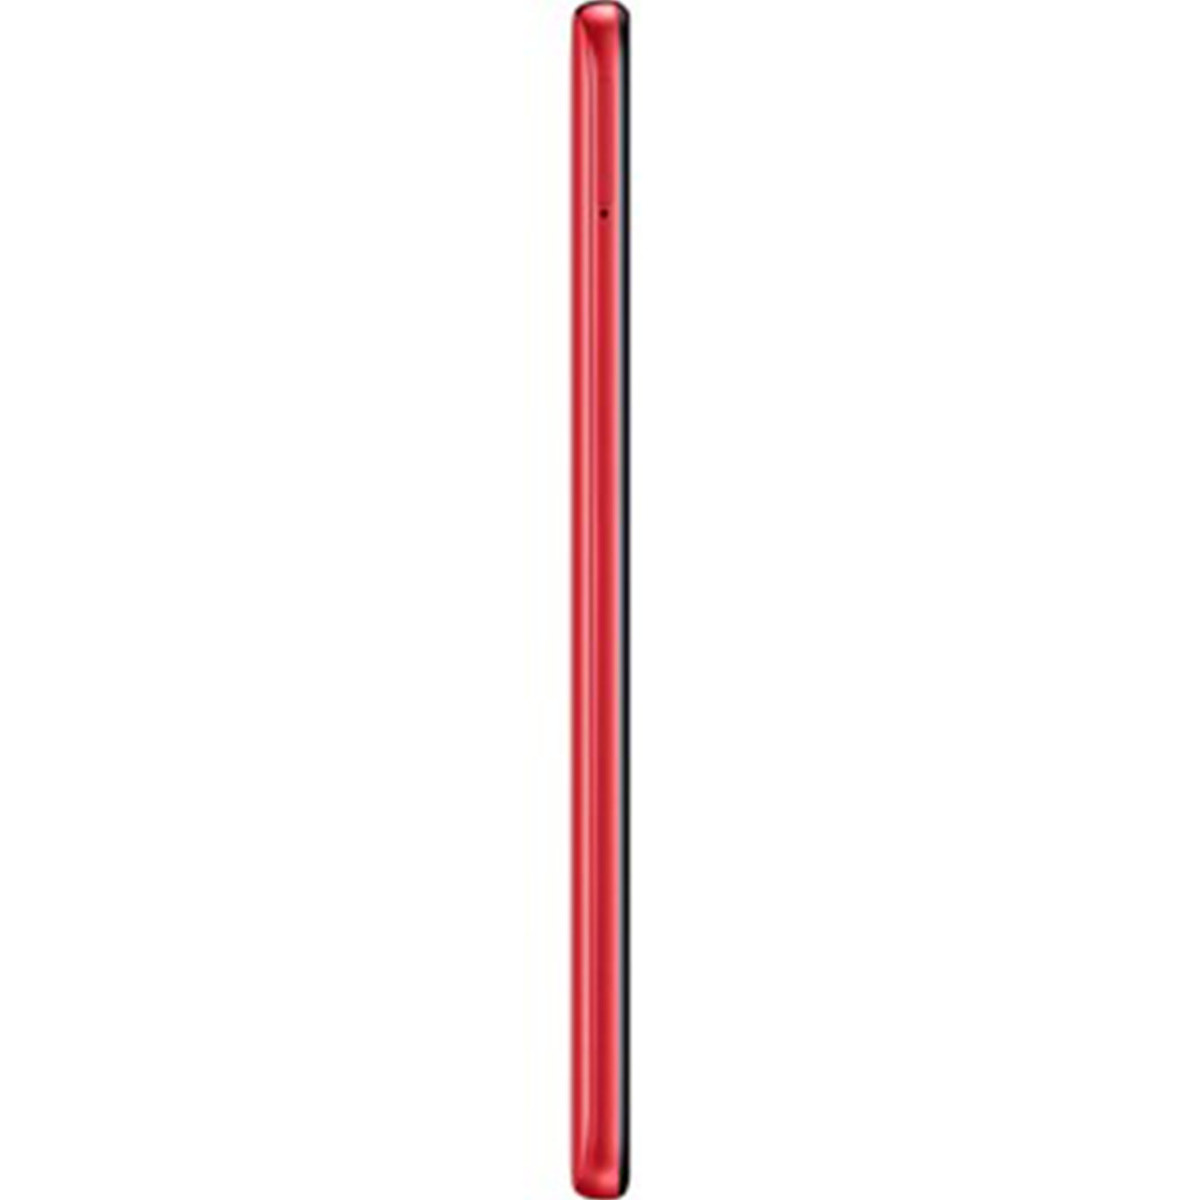 Buy Samsung Galaxy A20 Sma205 32gb Red Online Lulu Hypermarket Ksa